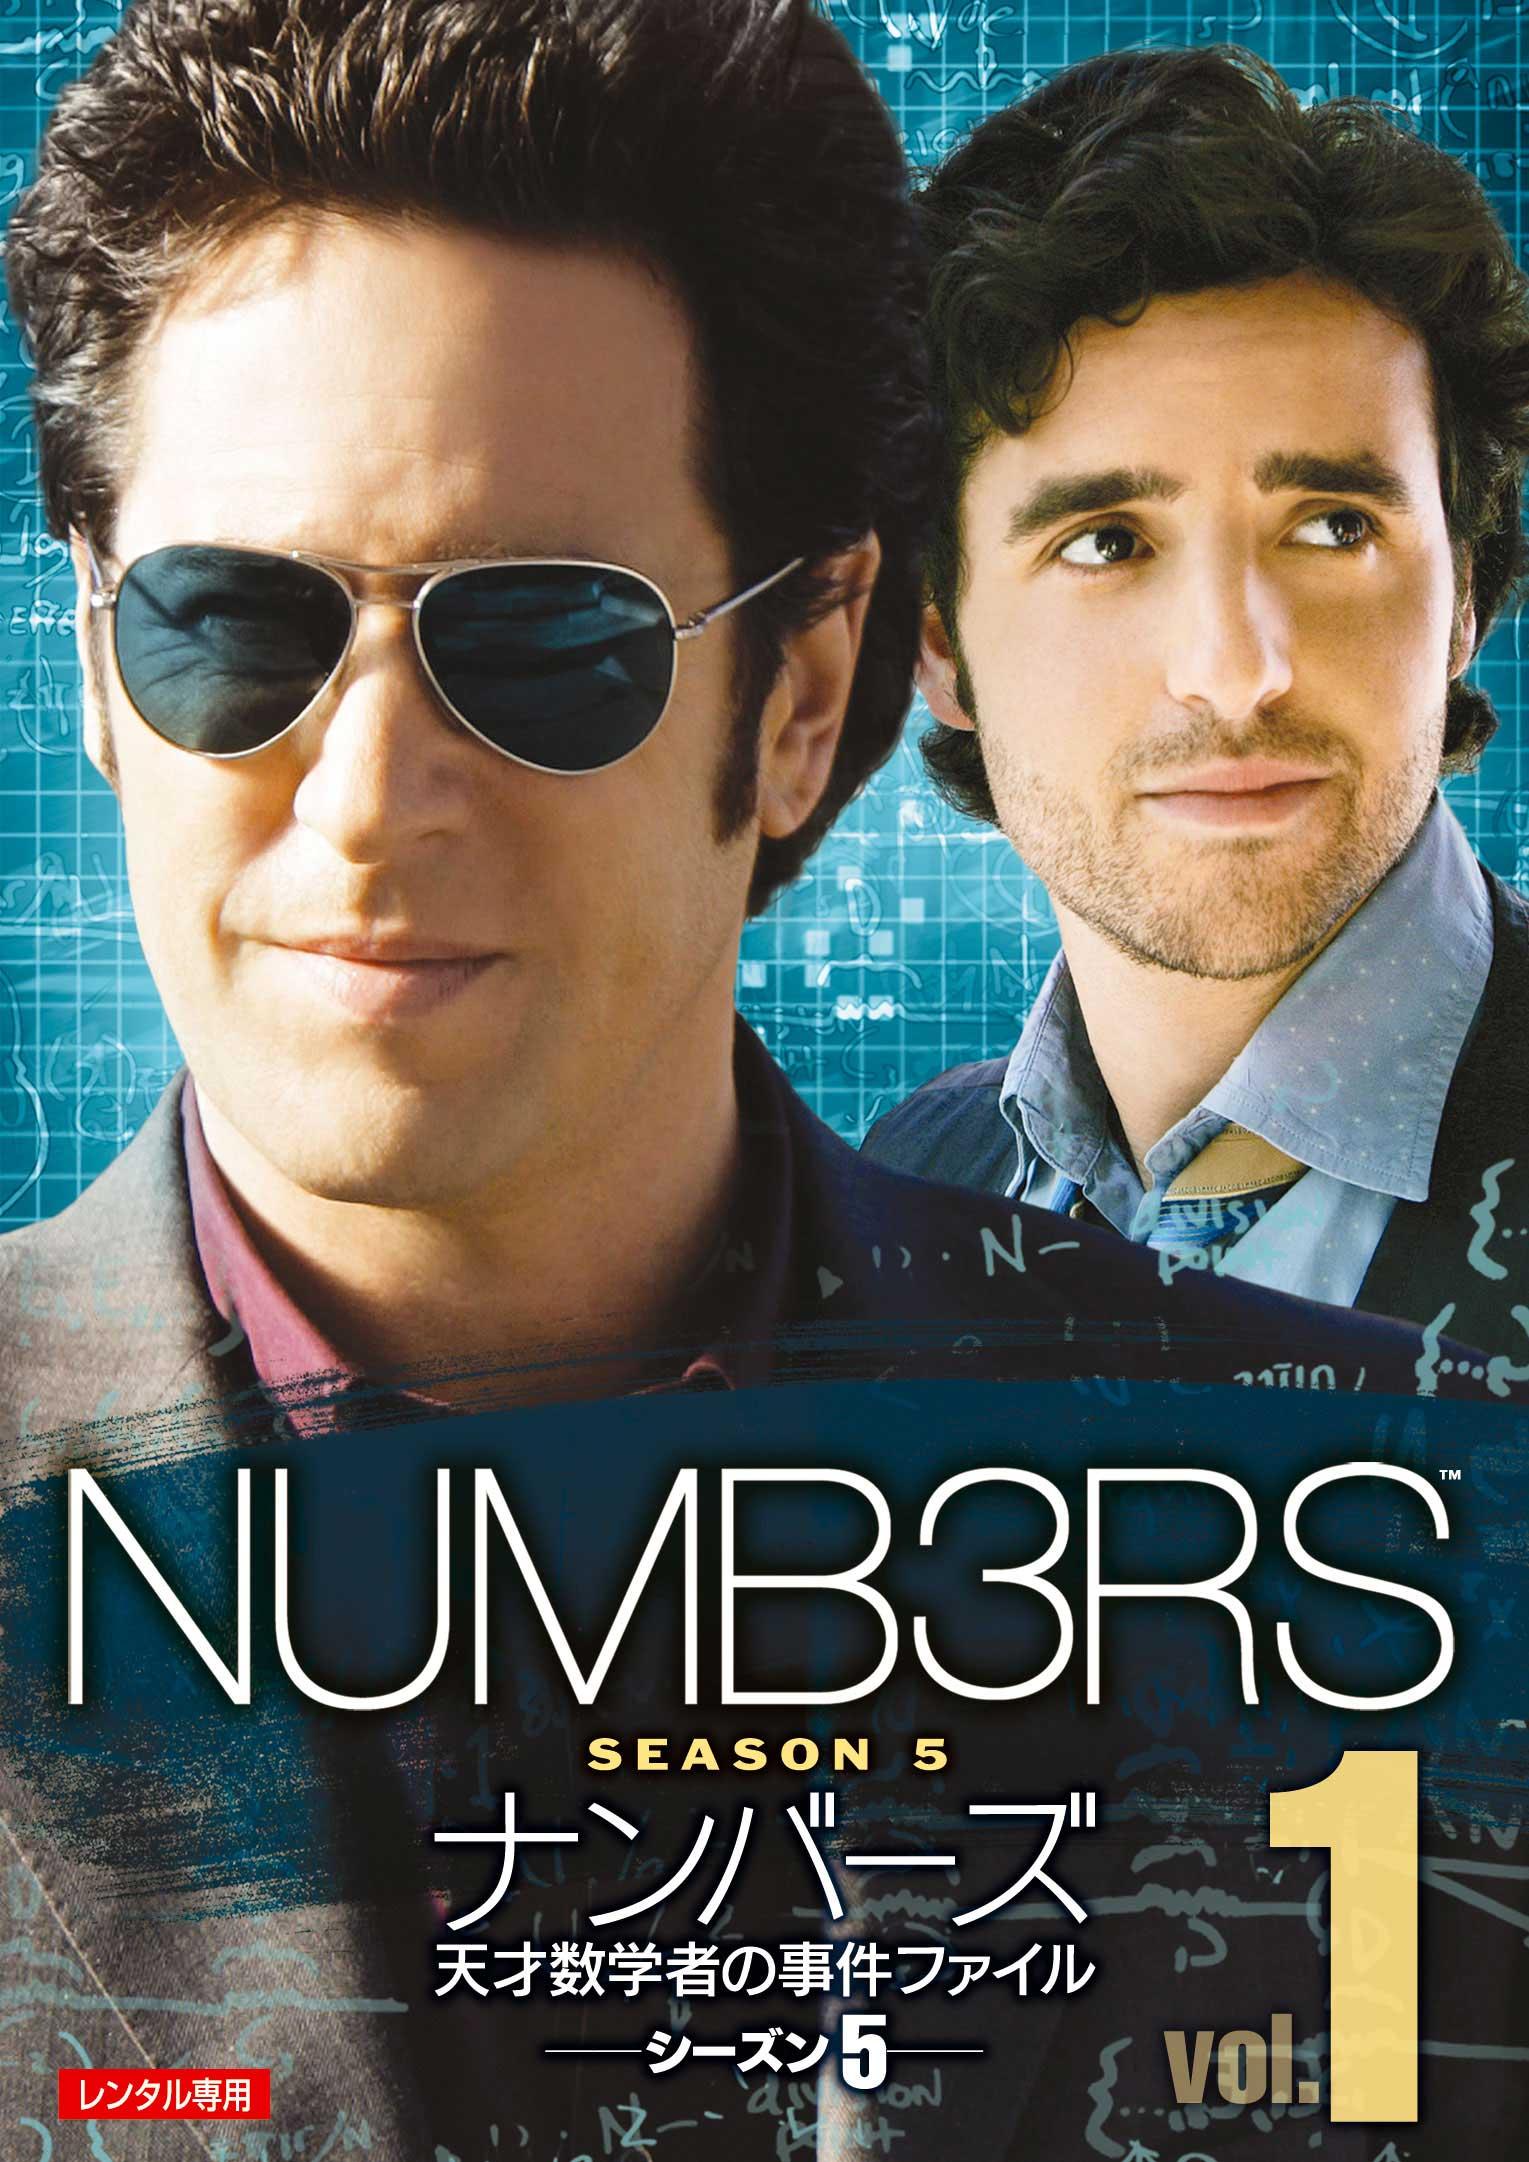 NUMBERS ~天才数学者の事件ファイル~ 第5シーズン